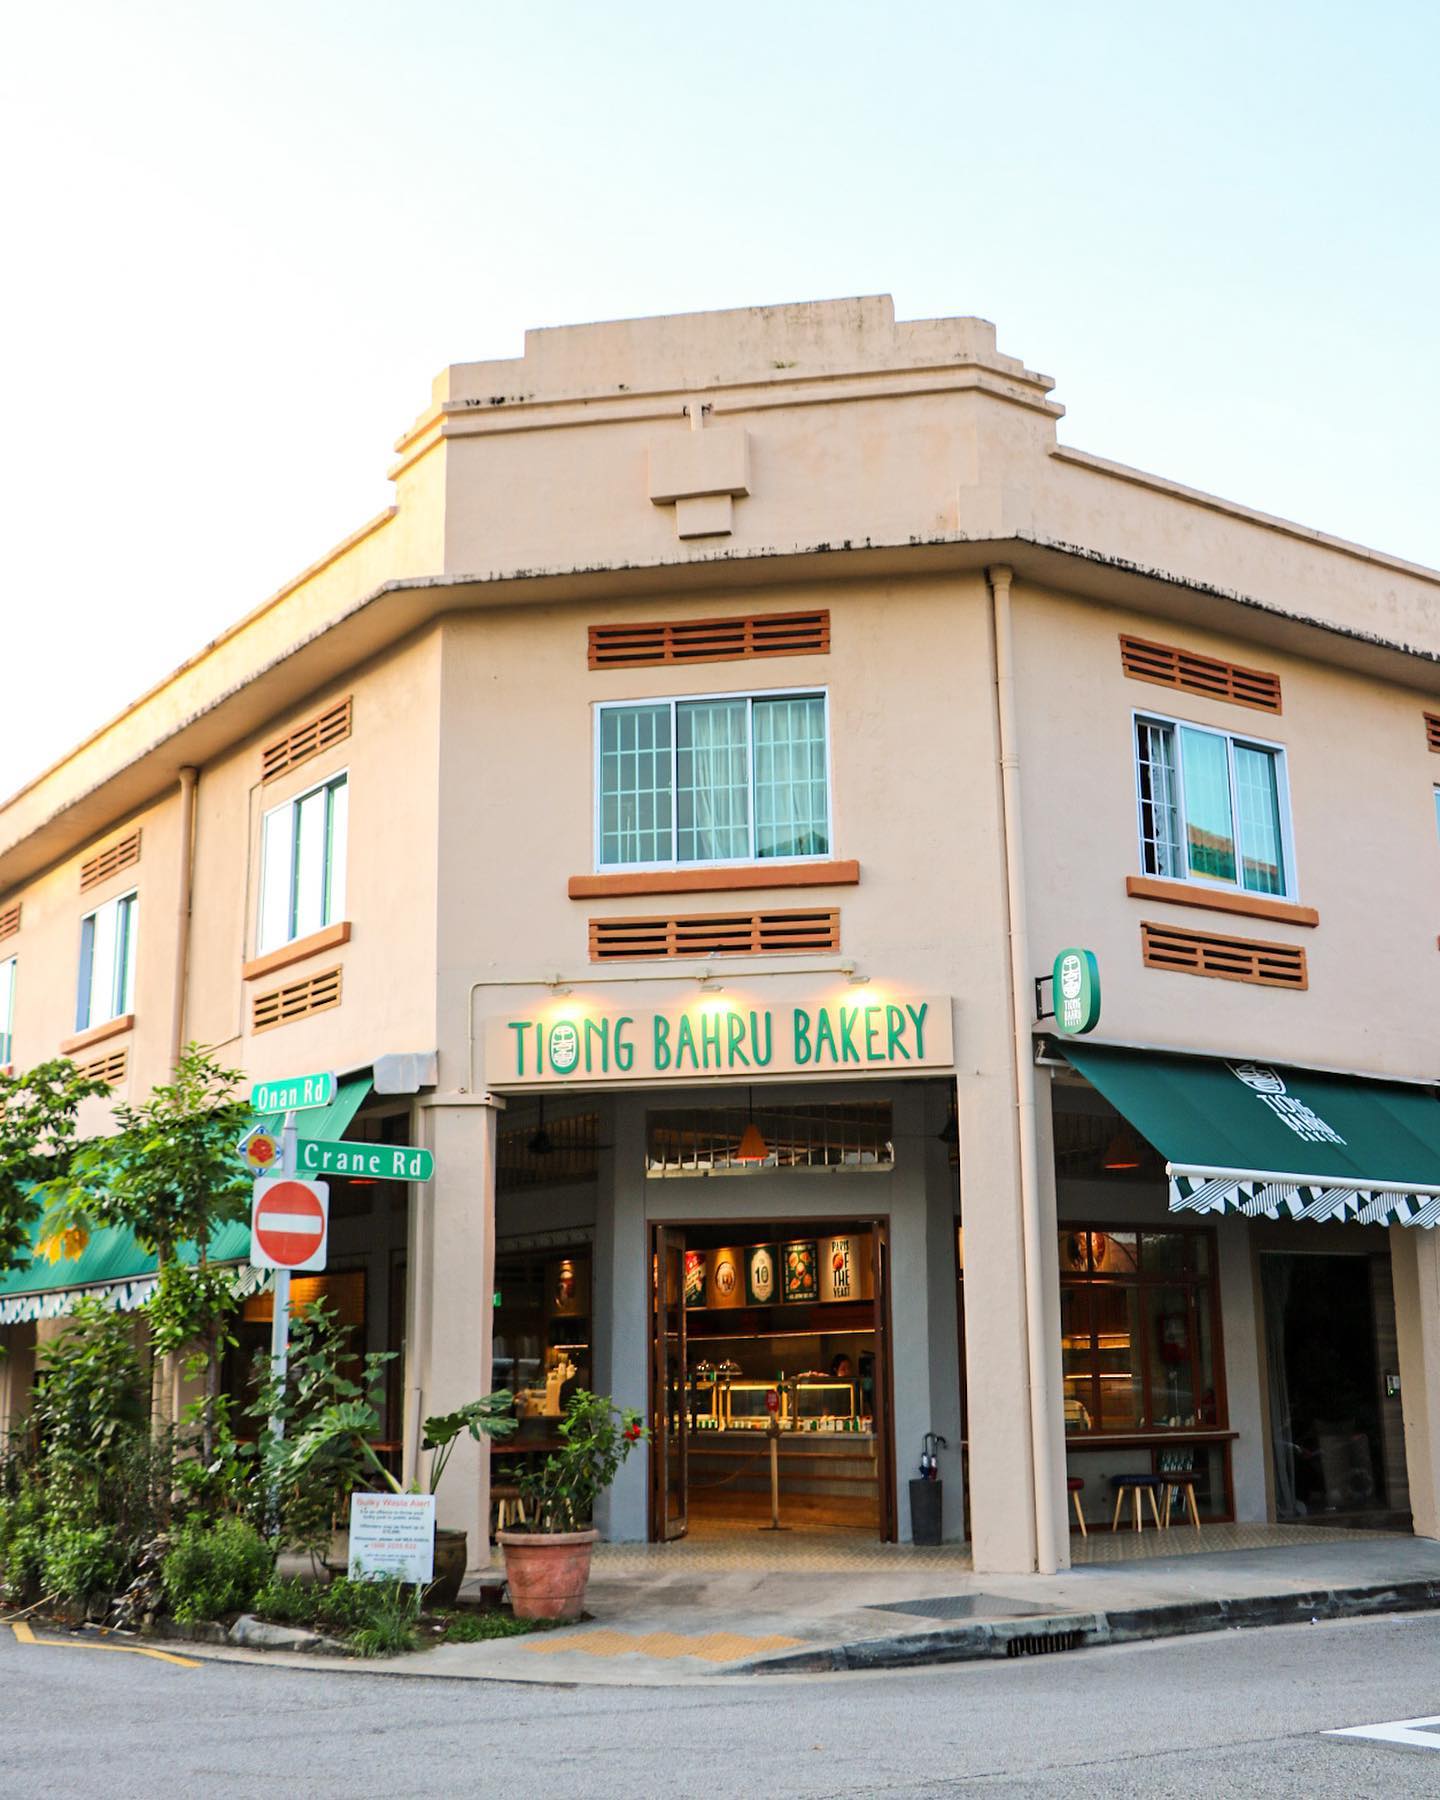 Tiong Bahru Bakery - Storefront